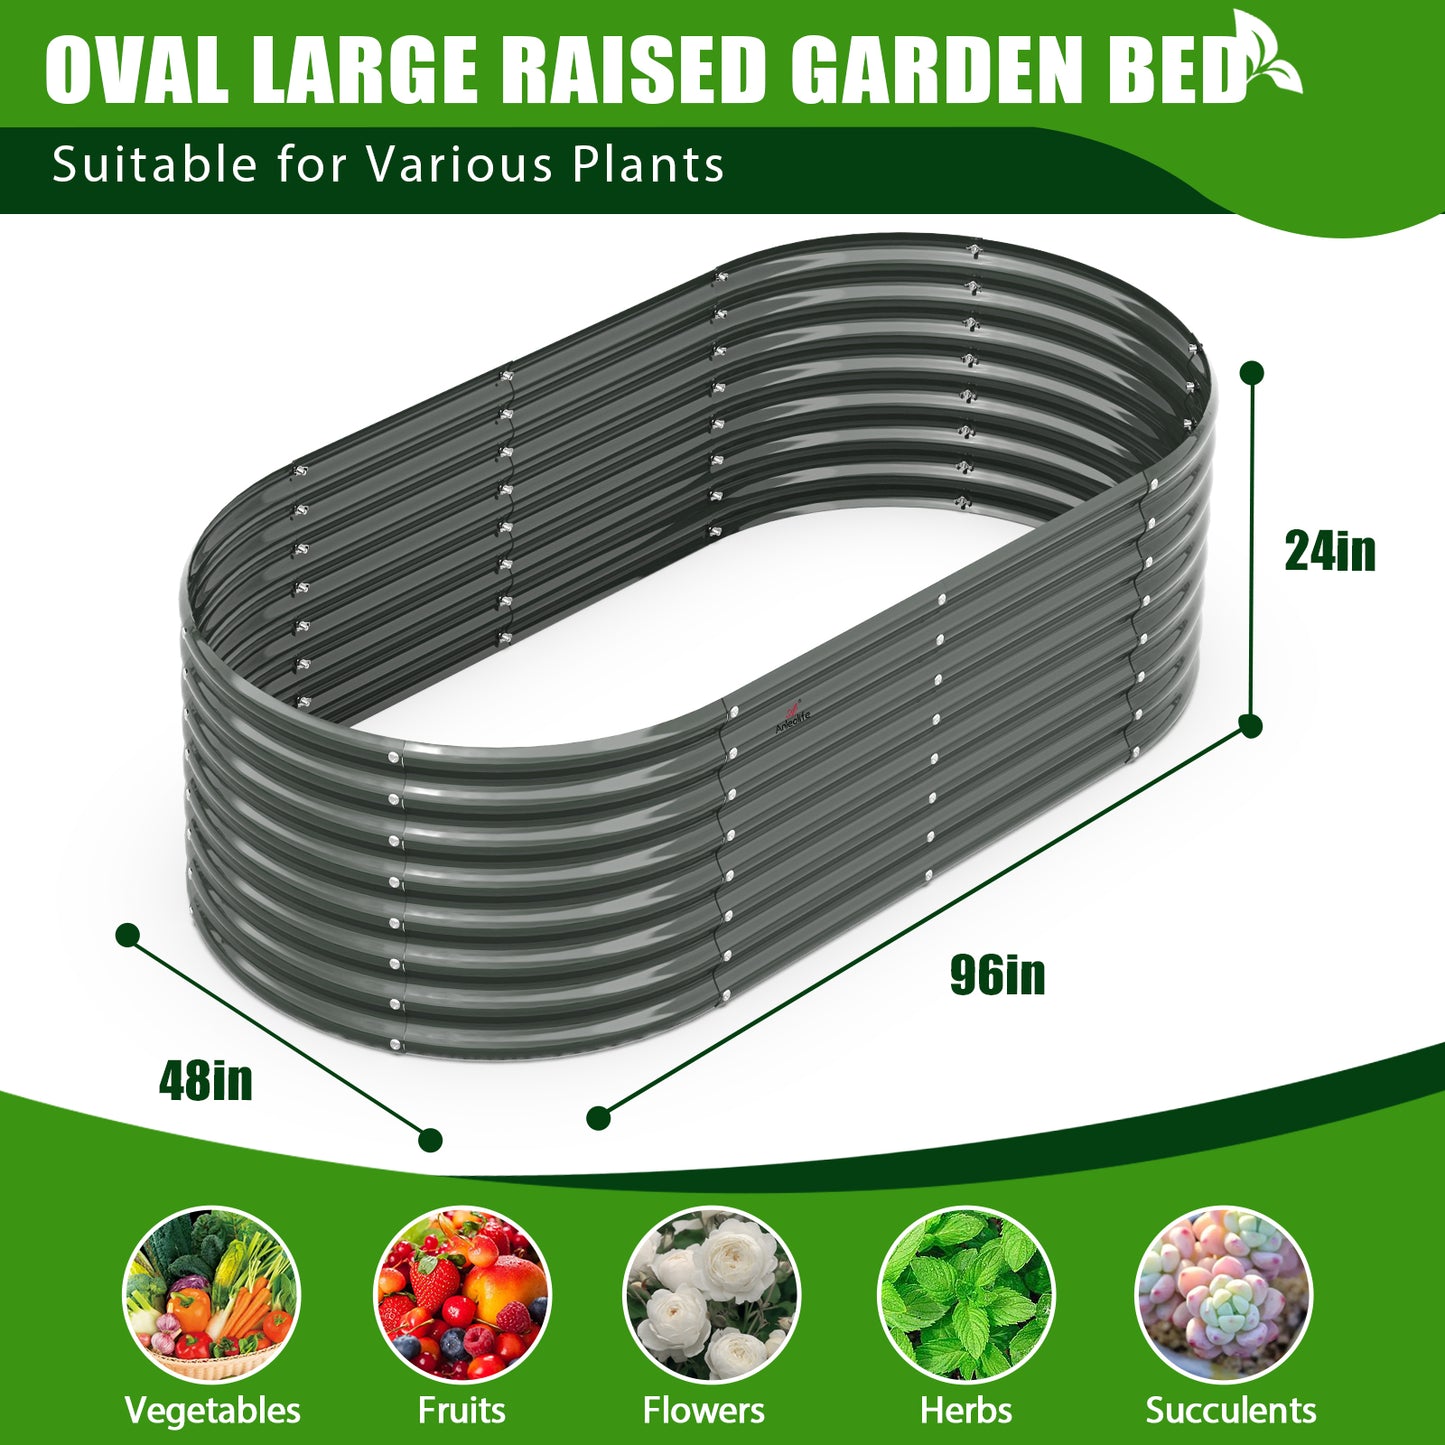 Oval Modular Metal Raised Garden Bed (Grey)